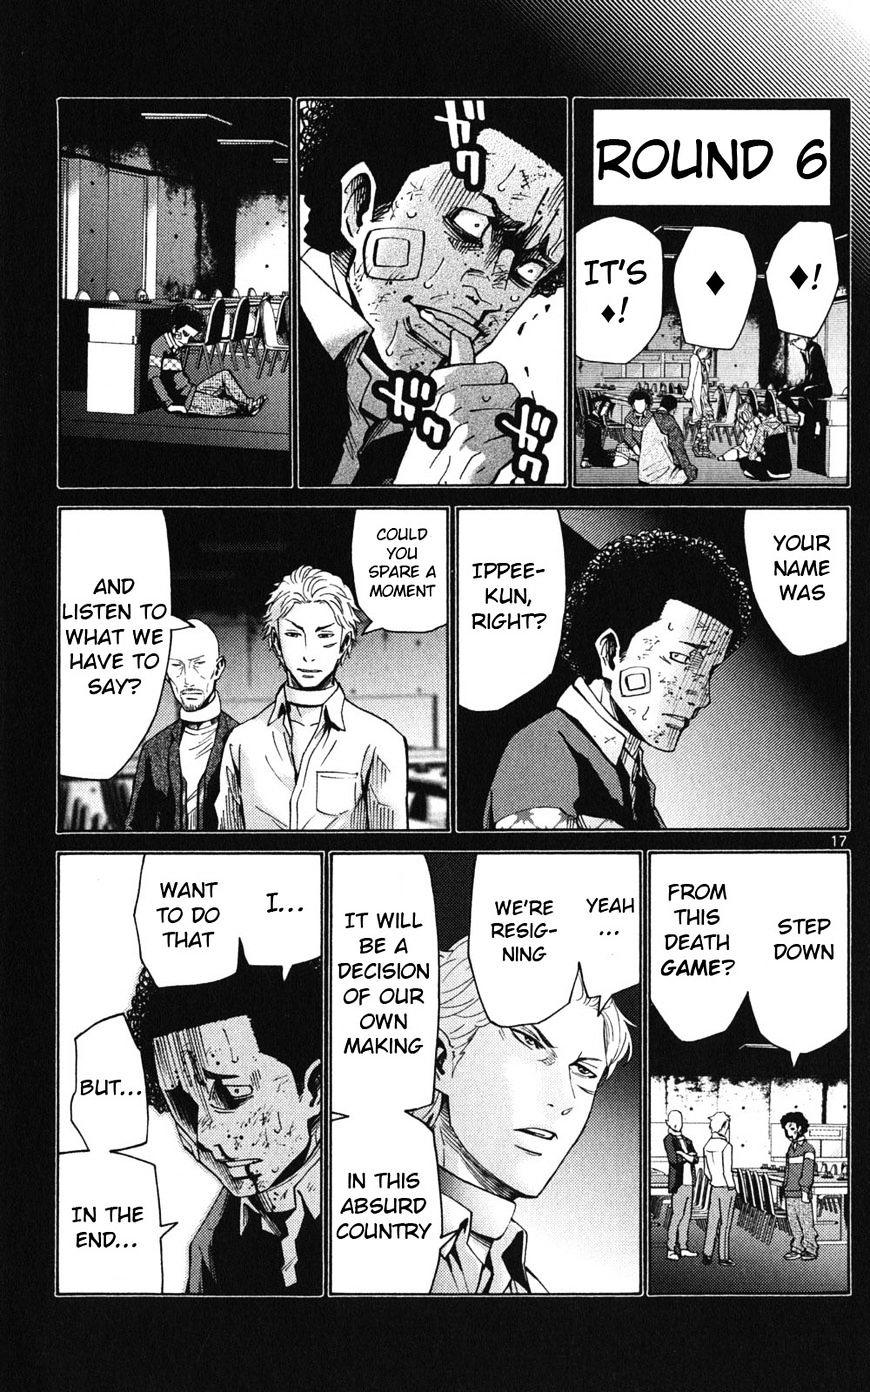 Imawa No Kuni No Alice Chapter 47 : Jack Of Hearts (3) page 19 - Mangakakalot